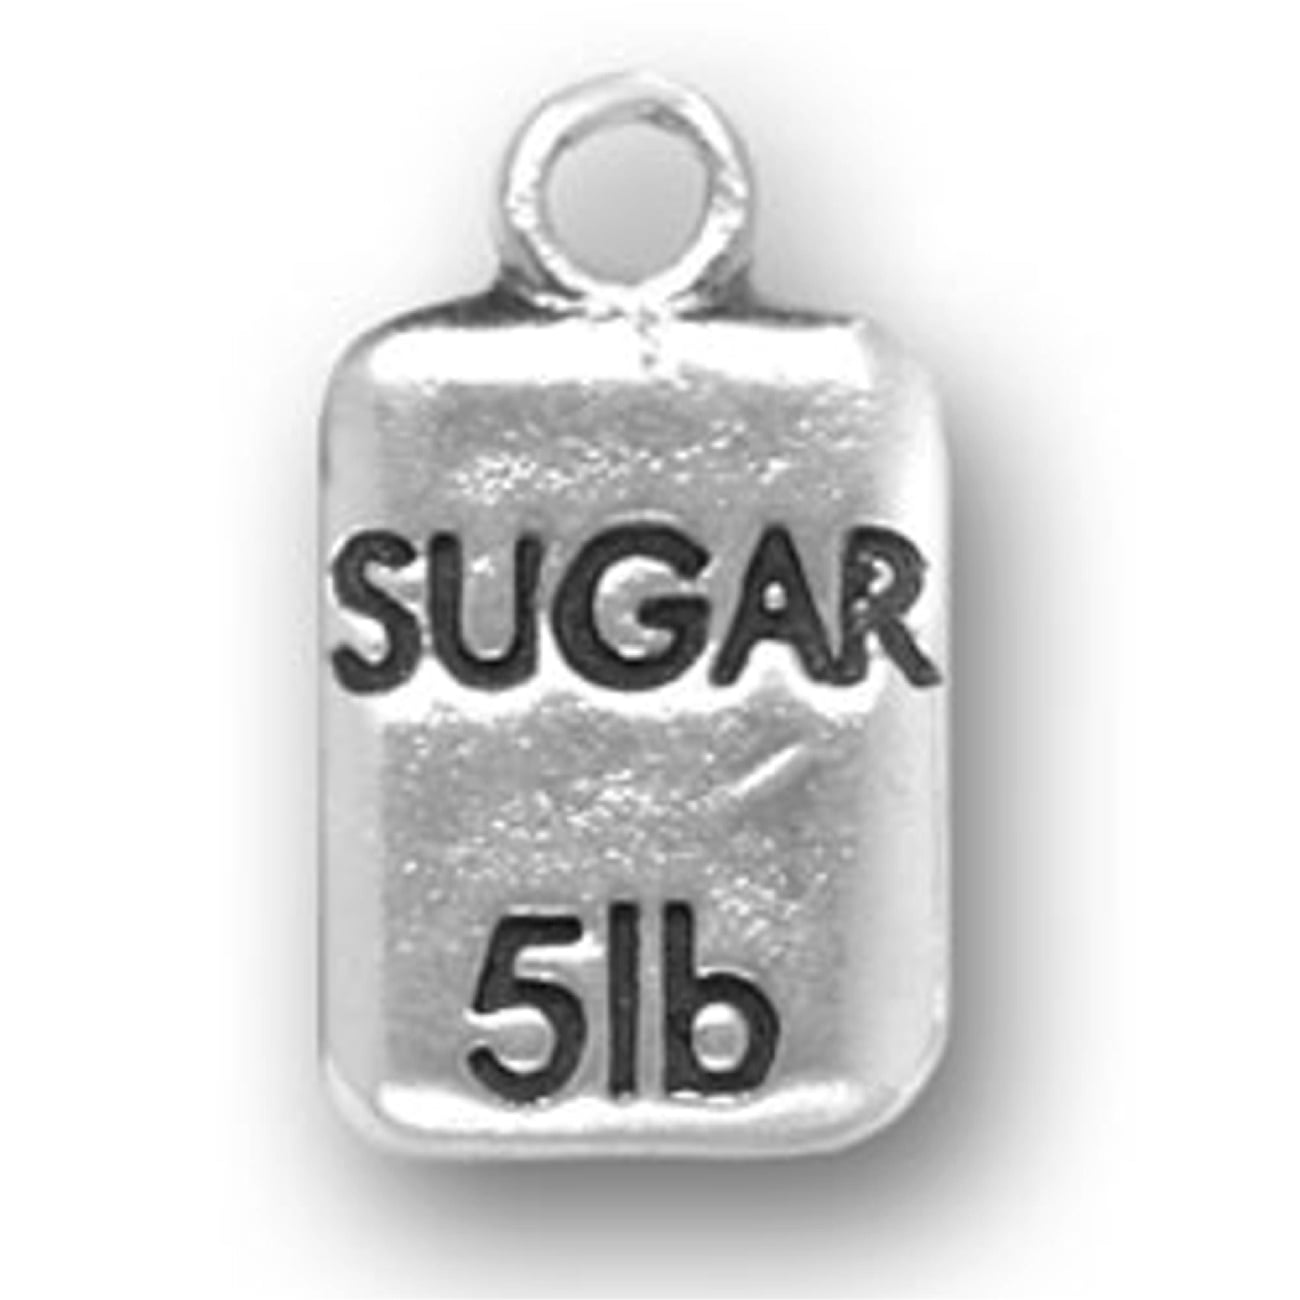 Sugar 5LB Bag Baking Baker Christmas Cookie Dangle Charm for European Bracelets